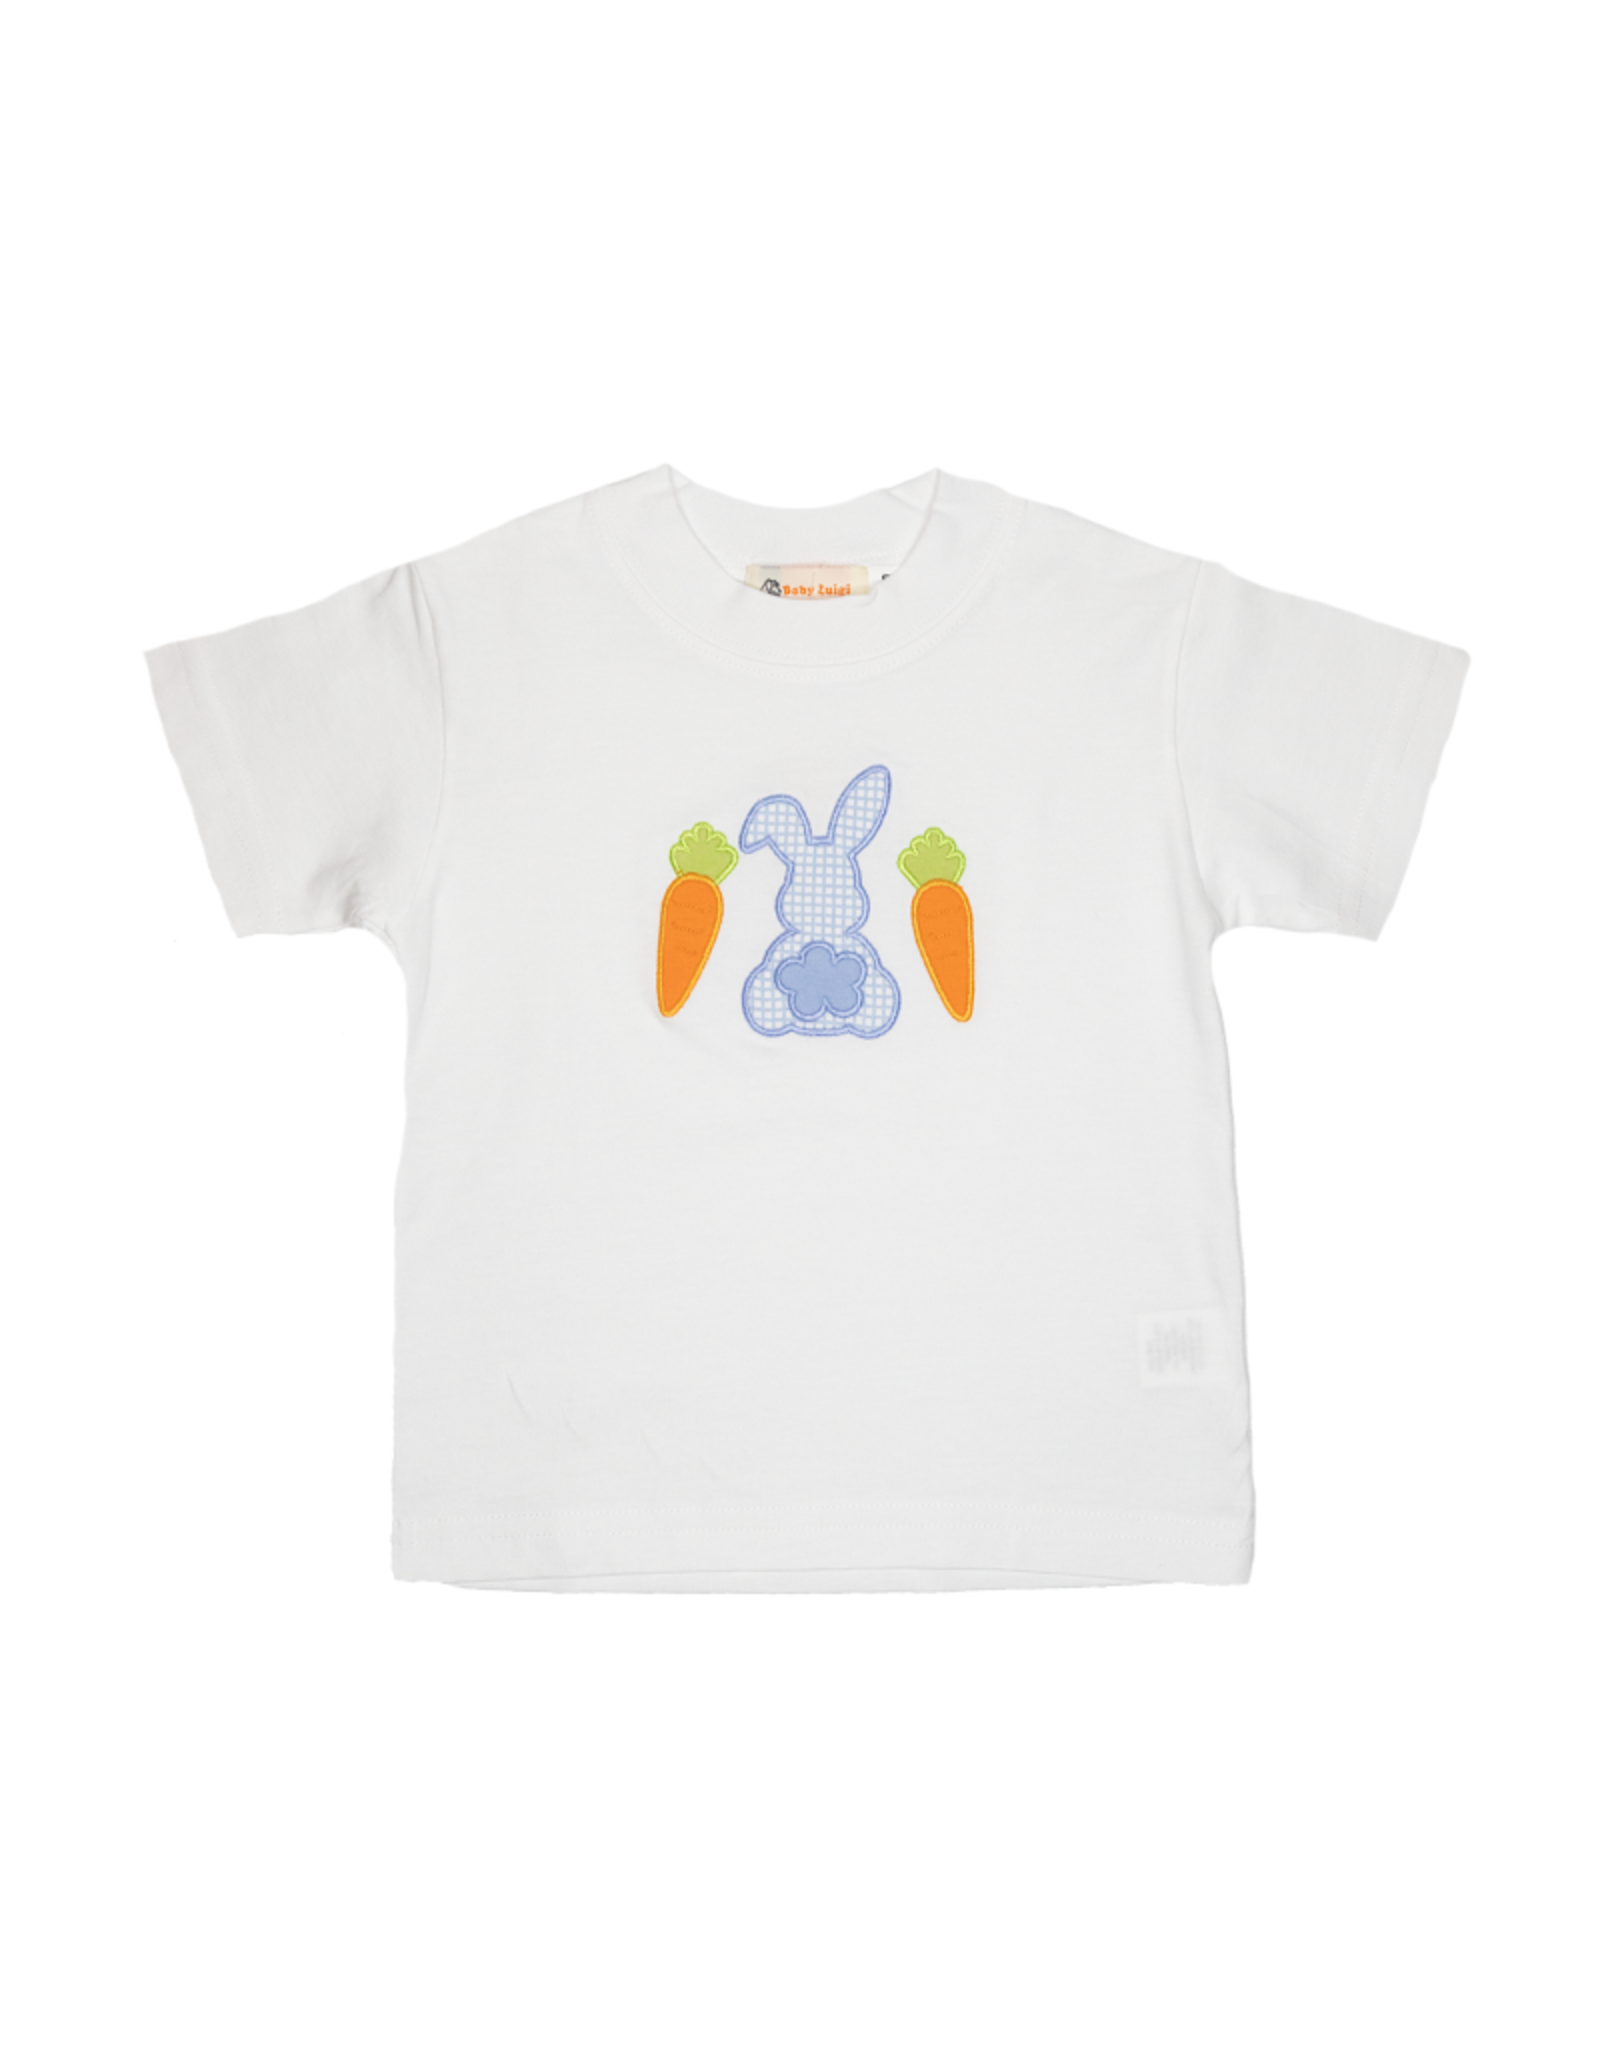 Luigi S22 Bunny Carrot Shirt